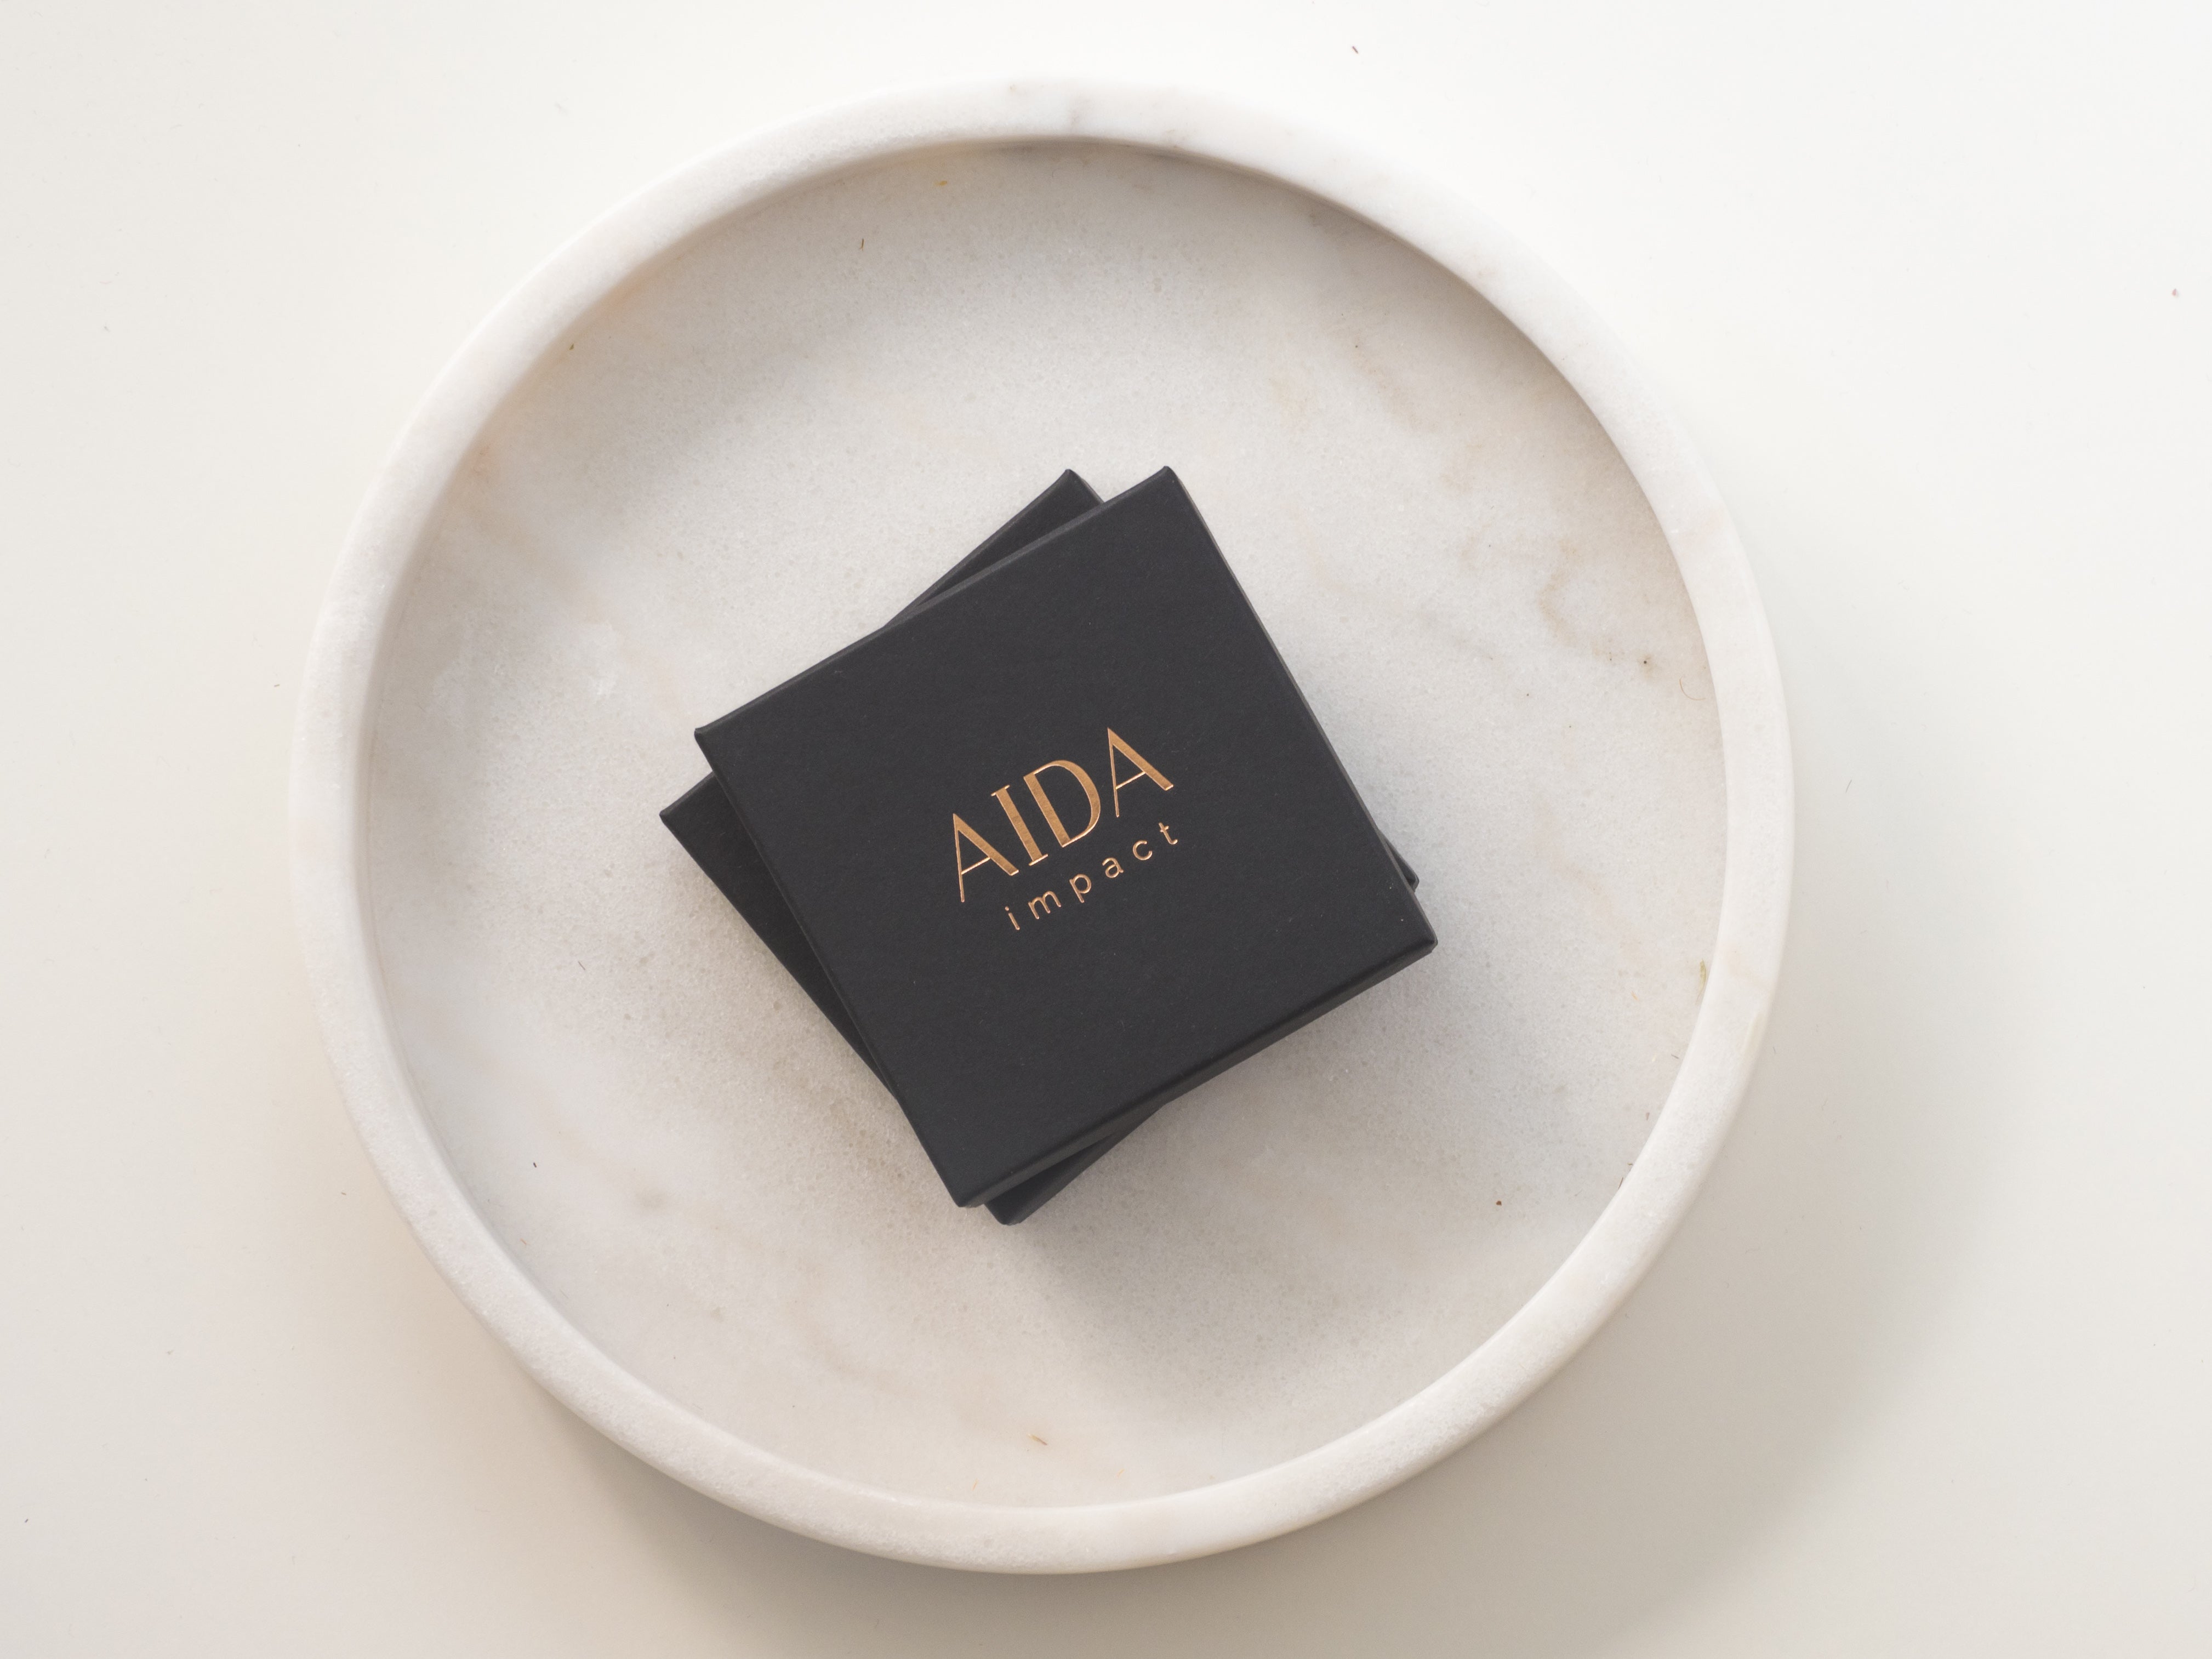 AIDA impact Giftcard